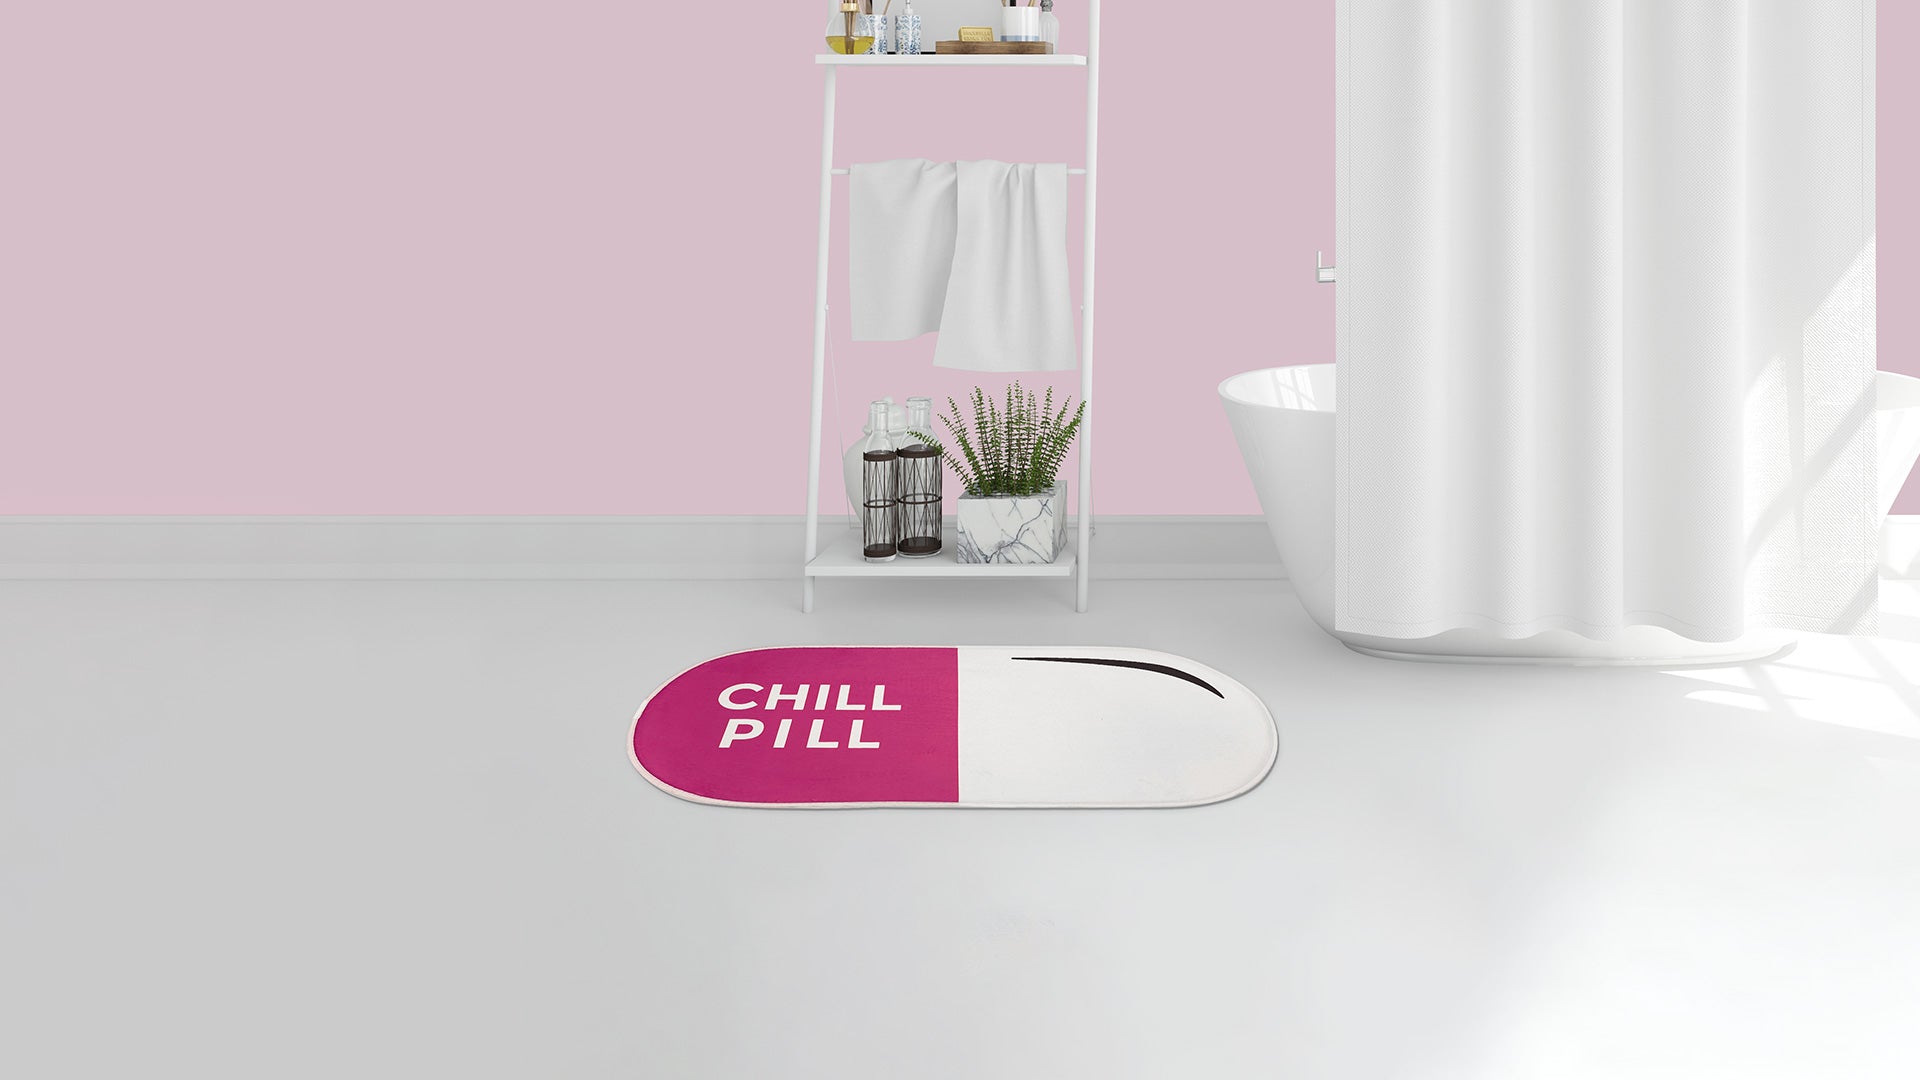 New Domi Chill Pill Bath Mat - 32x16 Inches Funny Bathroom Rug, Small